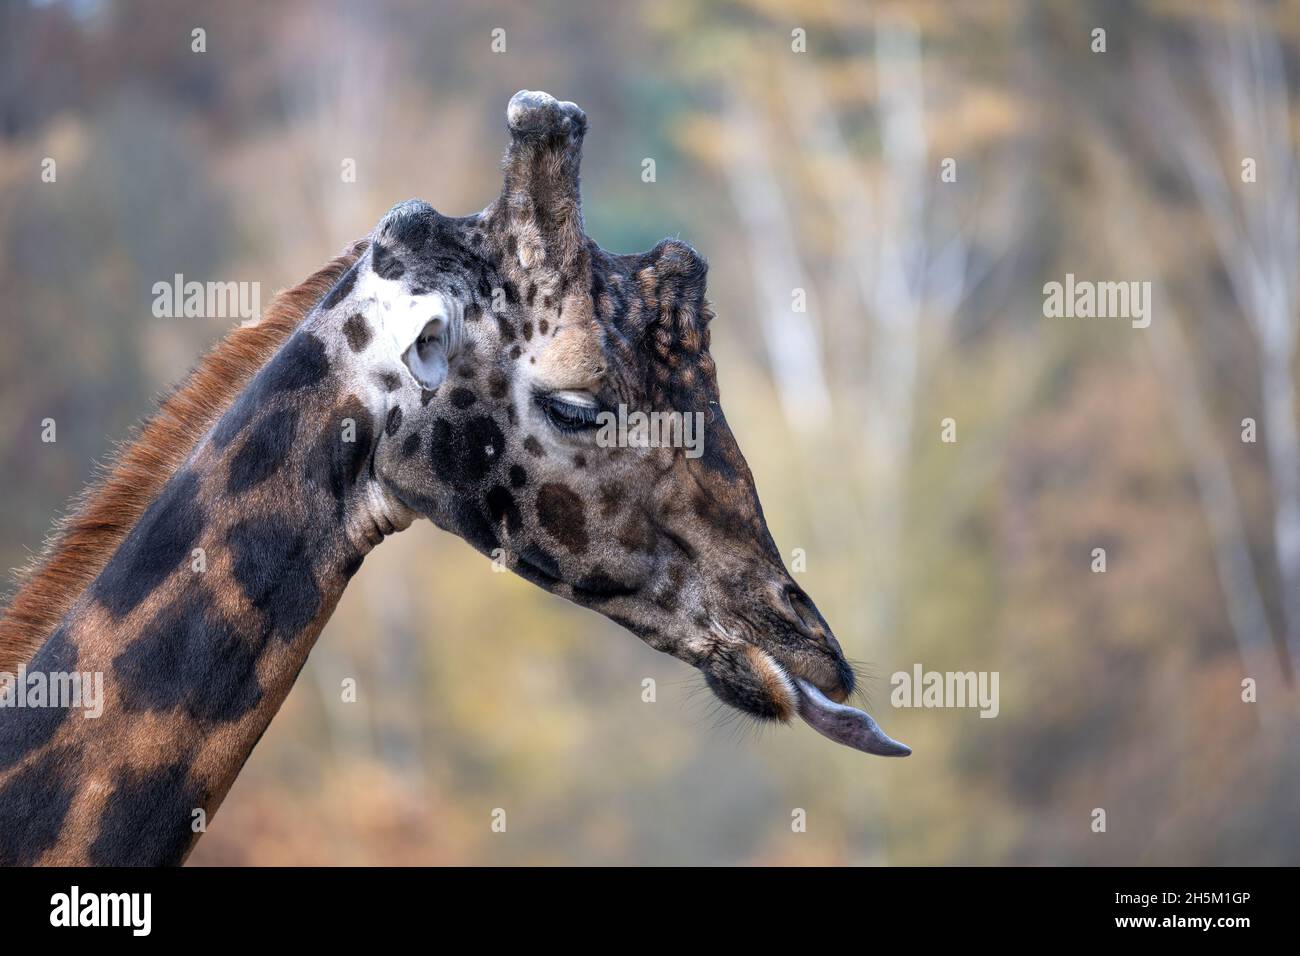 Portrait of a giraffe in the park. Stock Photo